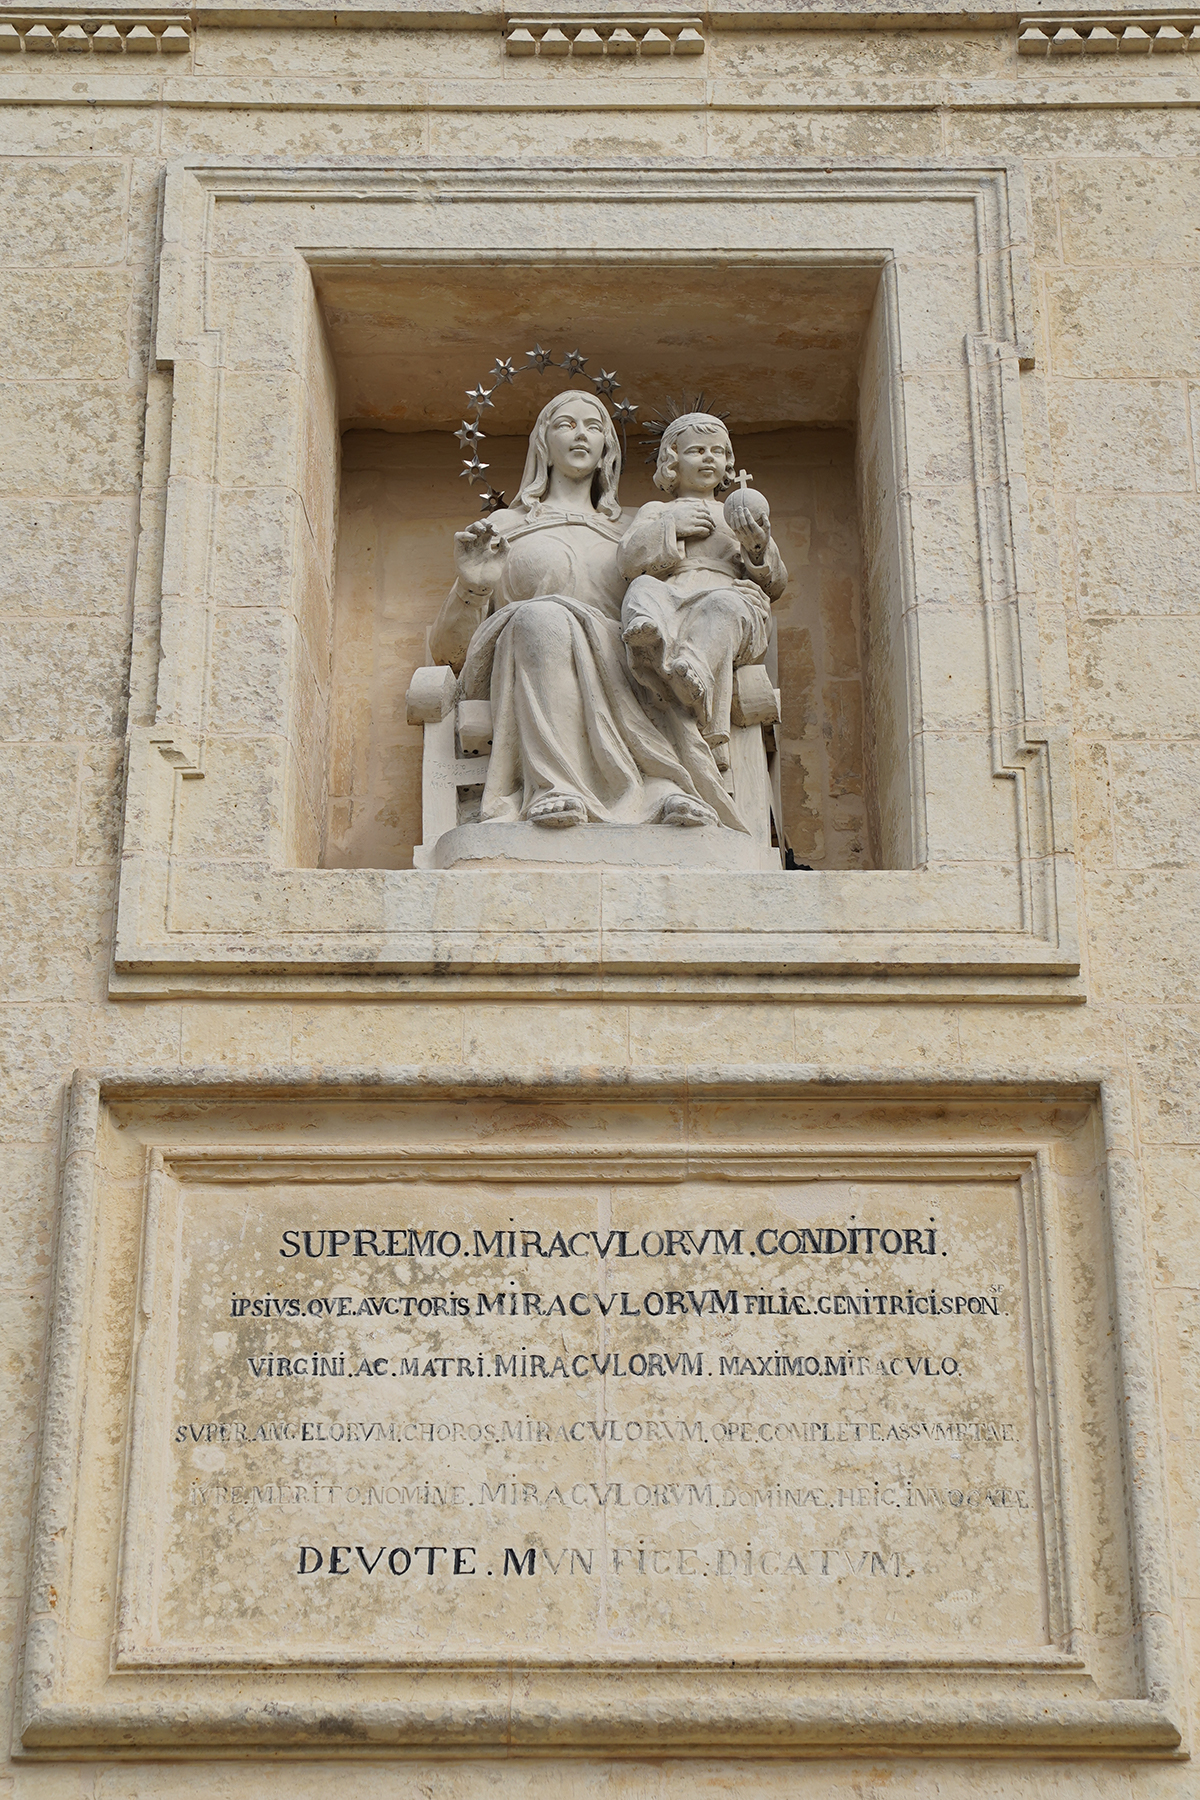 Malta under the Gaze of Mary